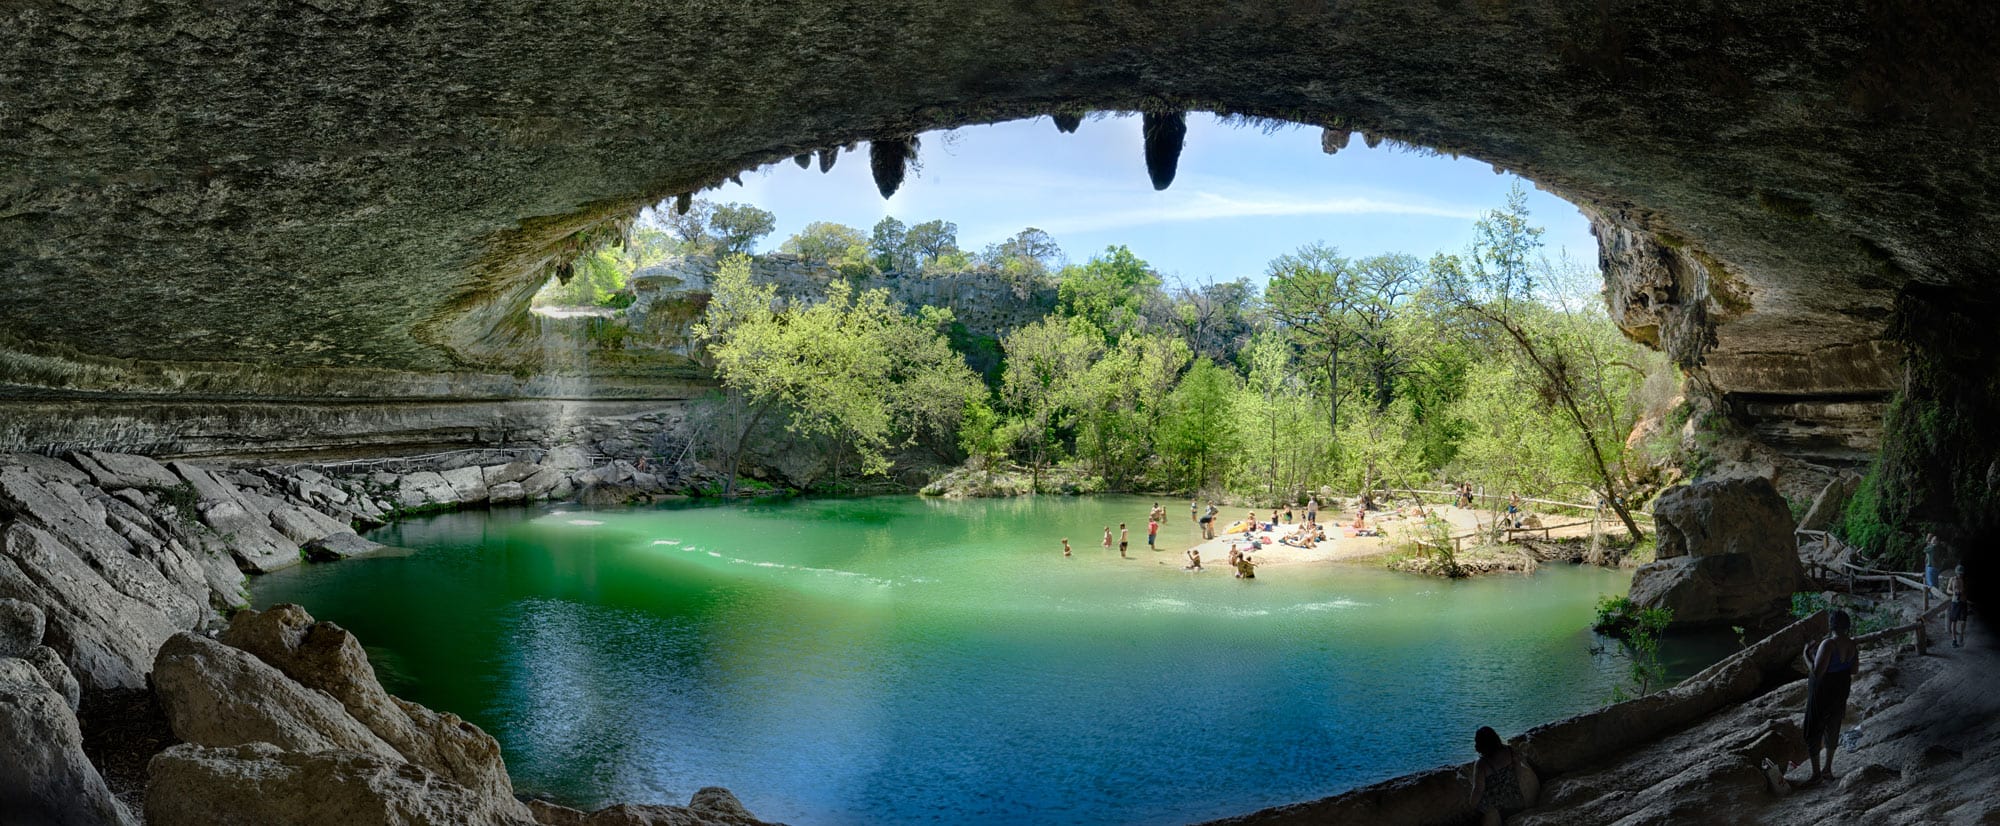 Hamilton Pool Preserve in Dripping Springs, TX